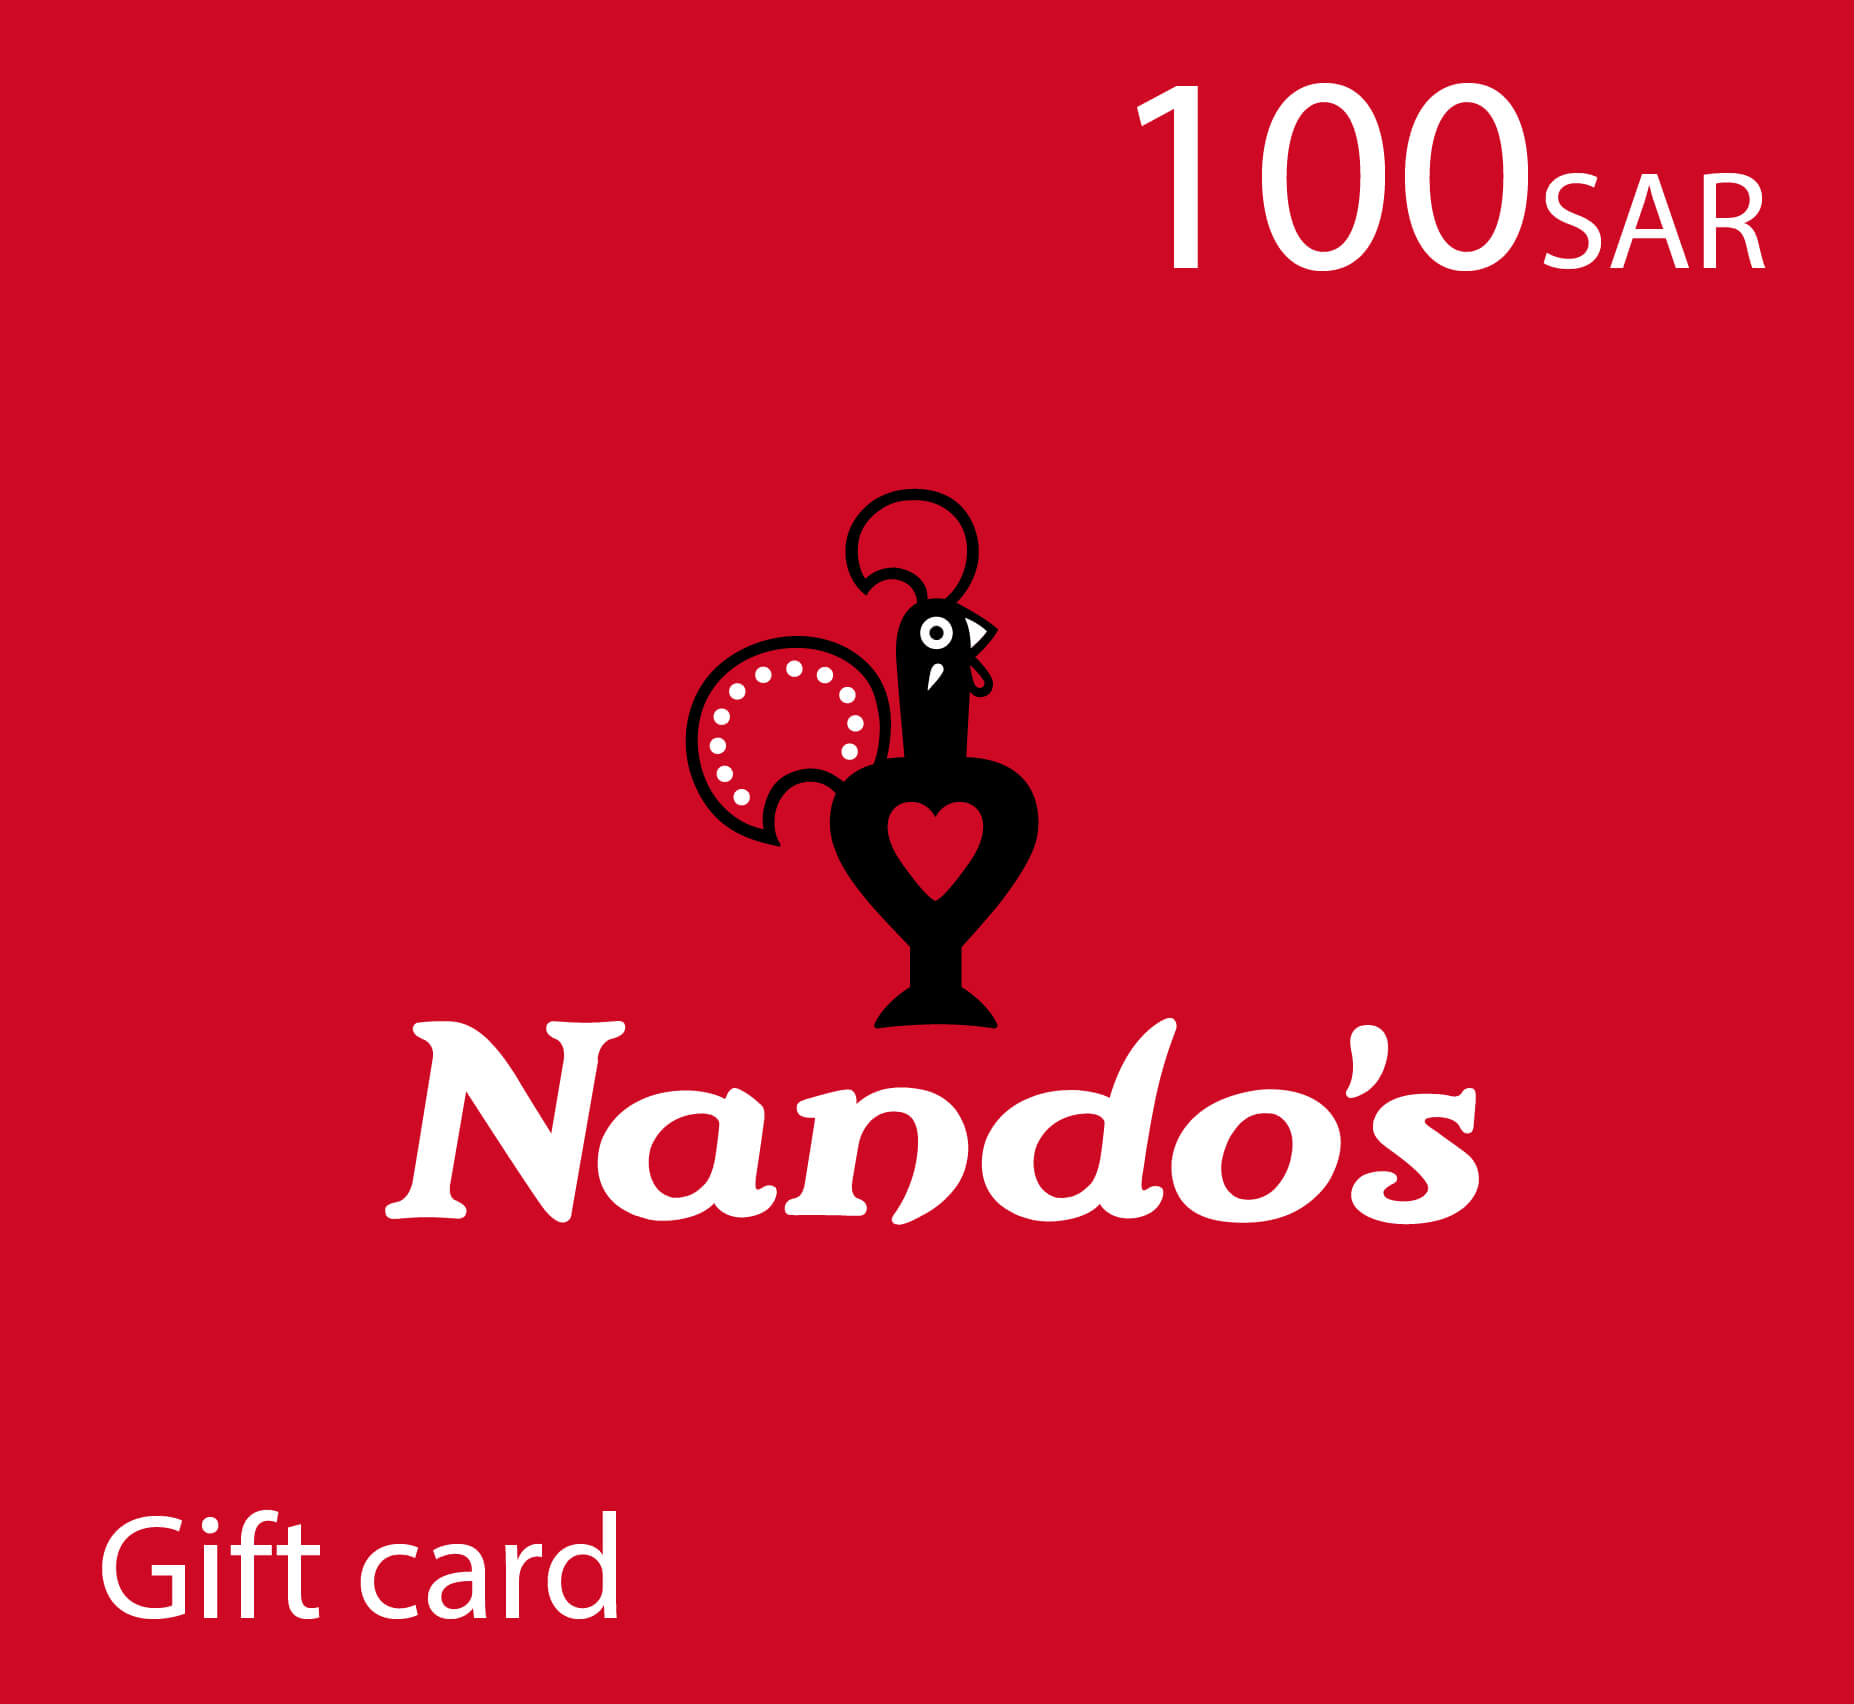 شراء بطاقة ناندوز Nandos - قسيمة شراء ناندوز - 100 ريال